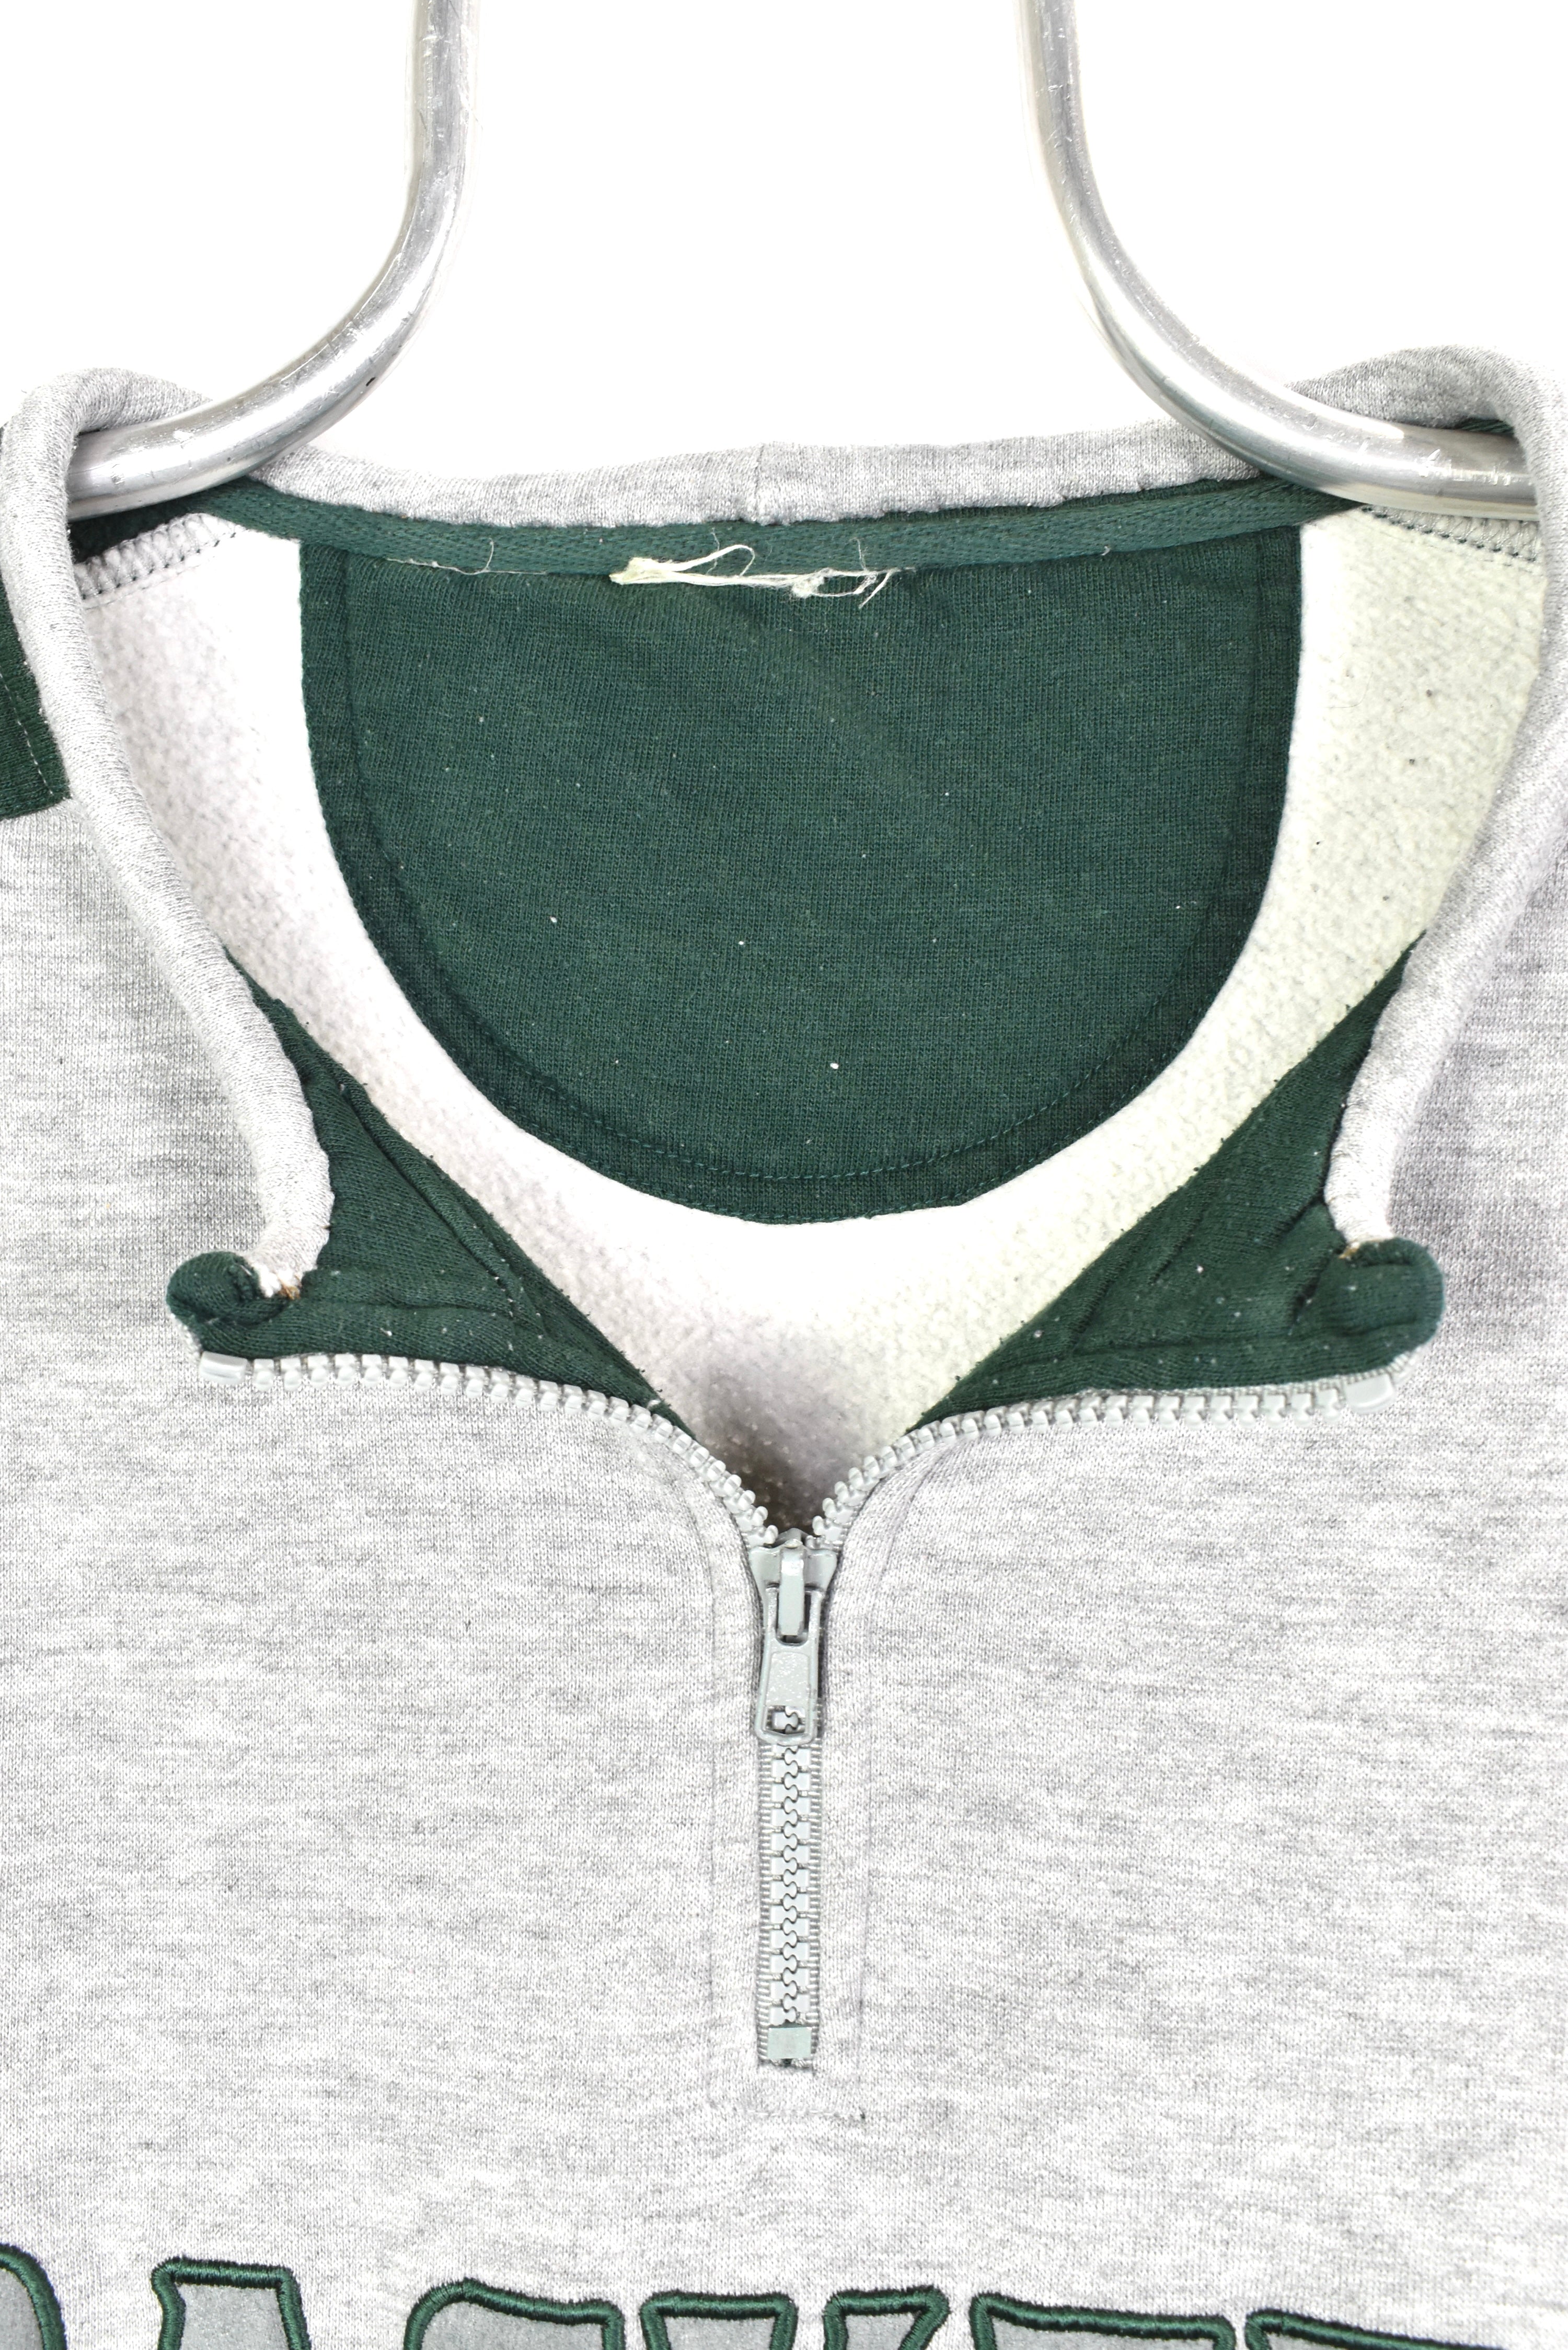 Vintage Green Bay Packers sweatshirt, NFL 1/4 zip embroidered sweater - XL, grey PRO SPORT